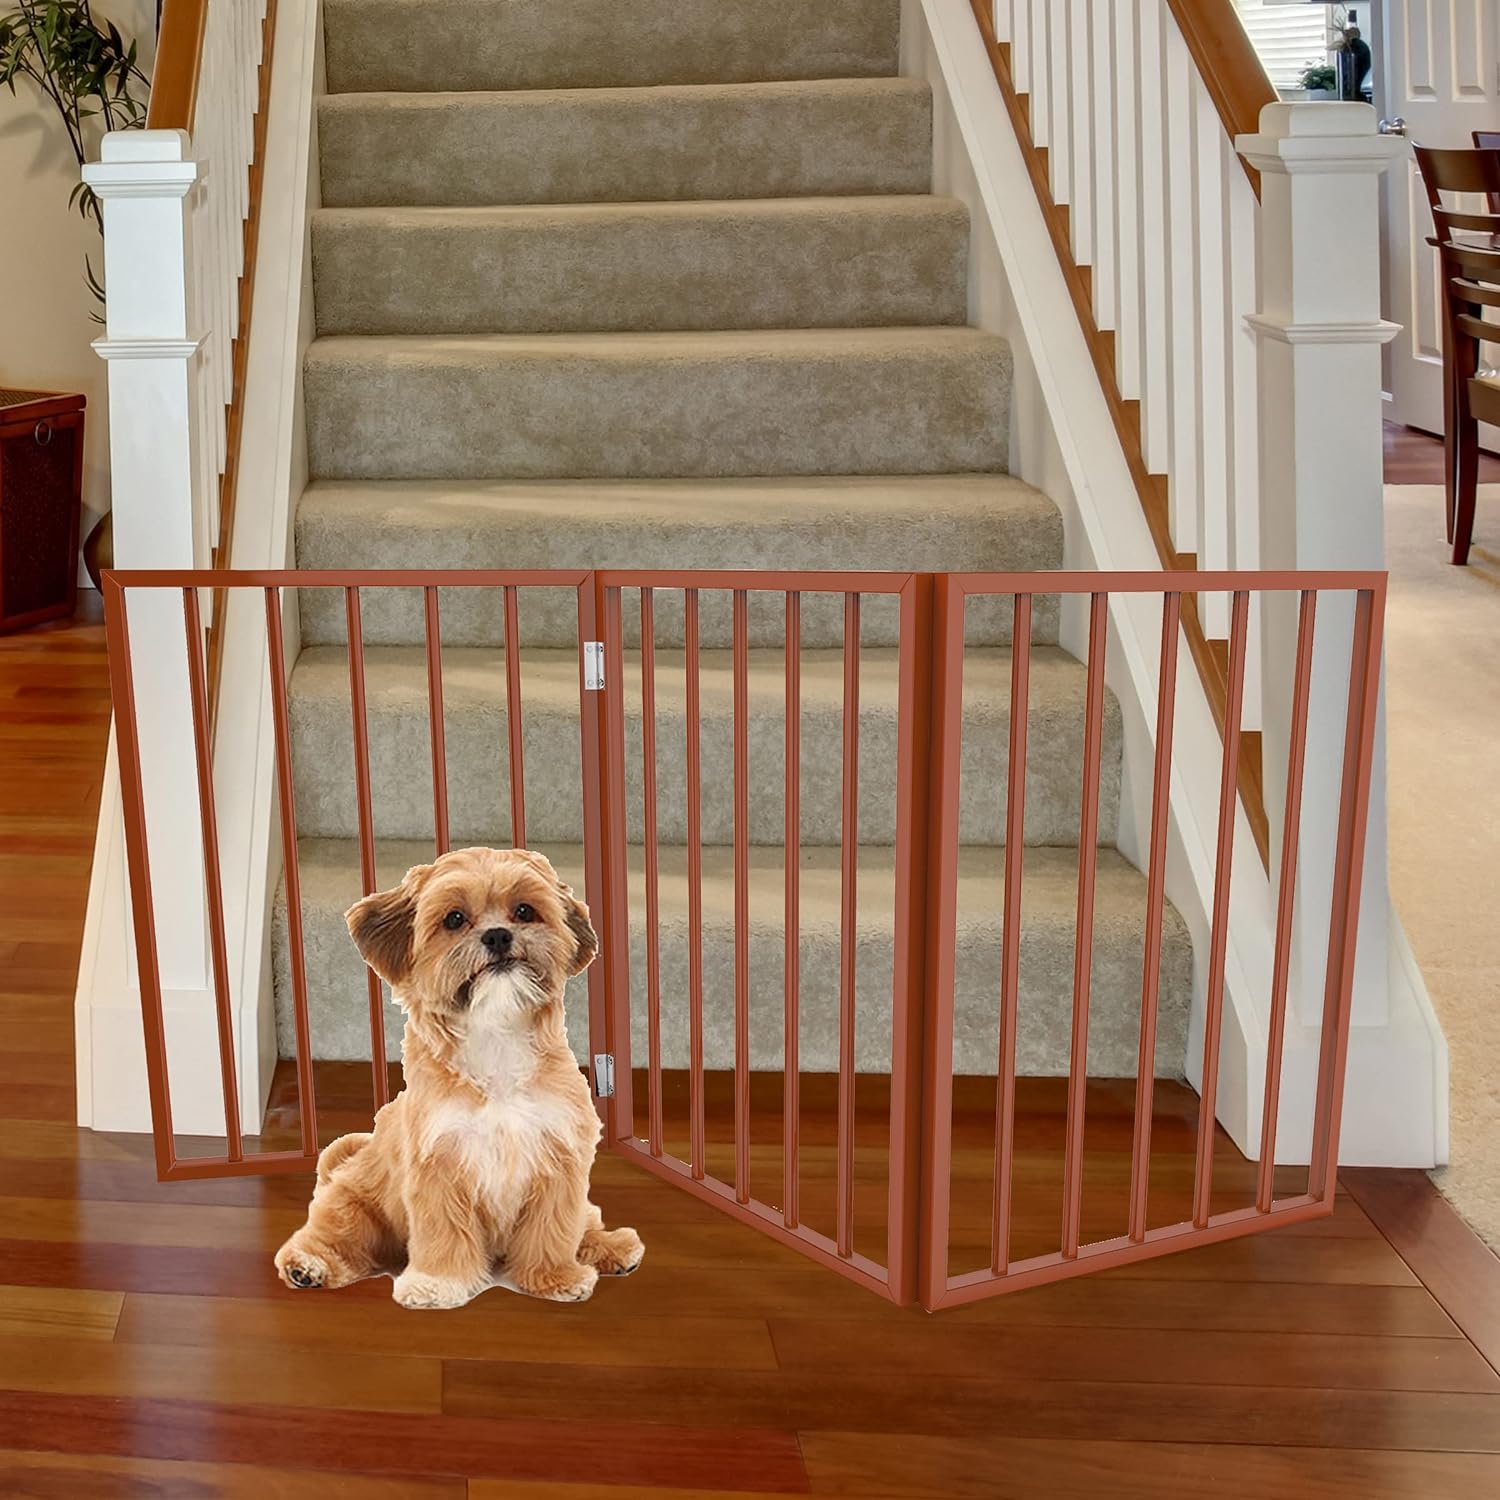 PETMAKER Pet Gate Puerta para perros para puertas, escaleras o